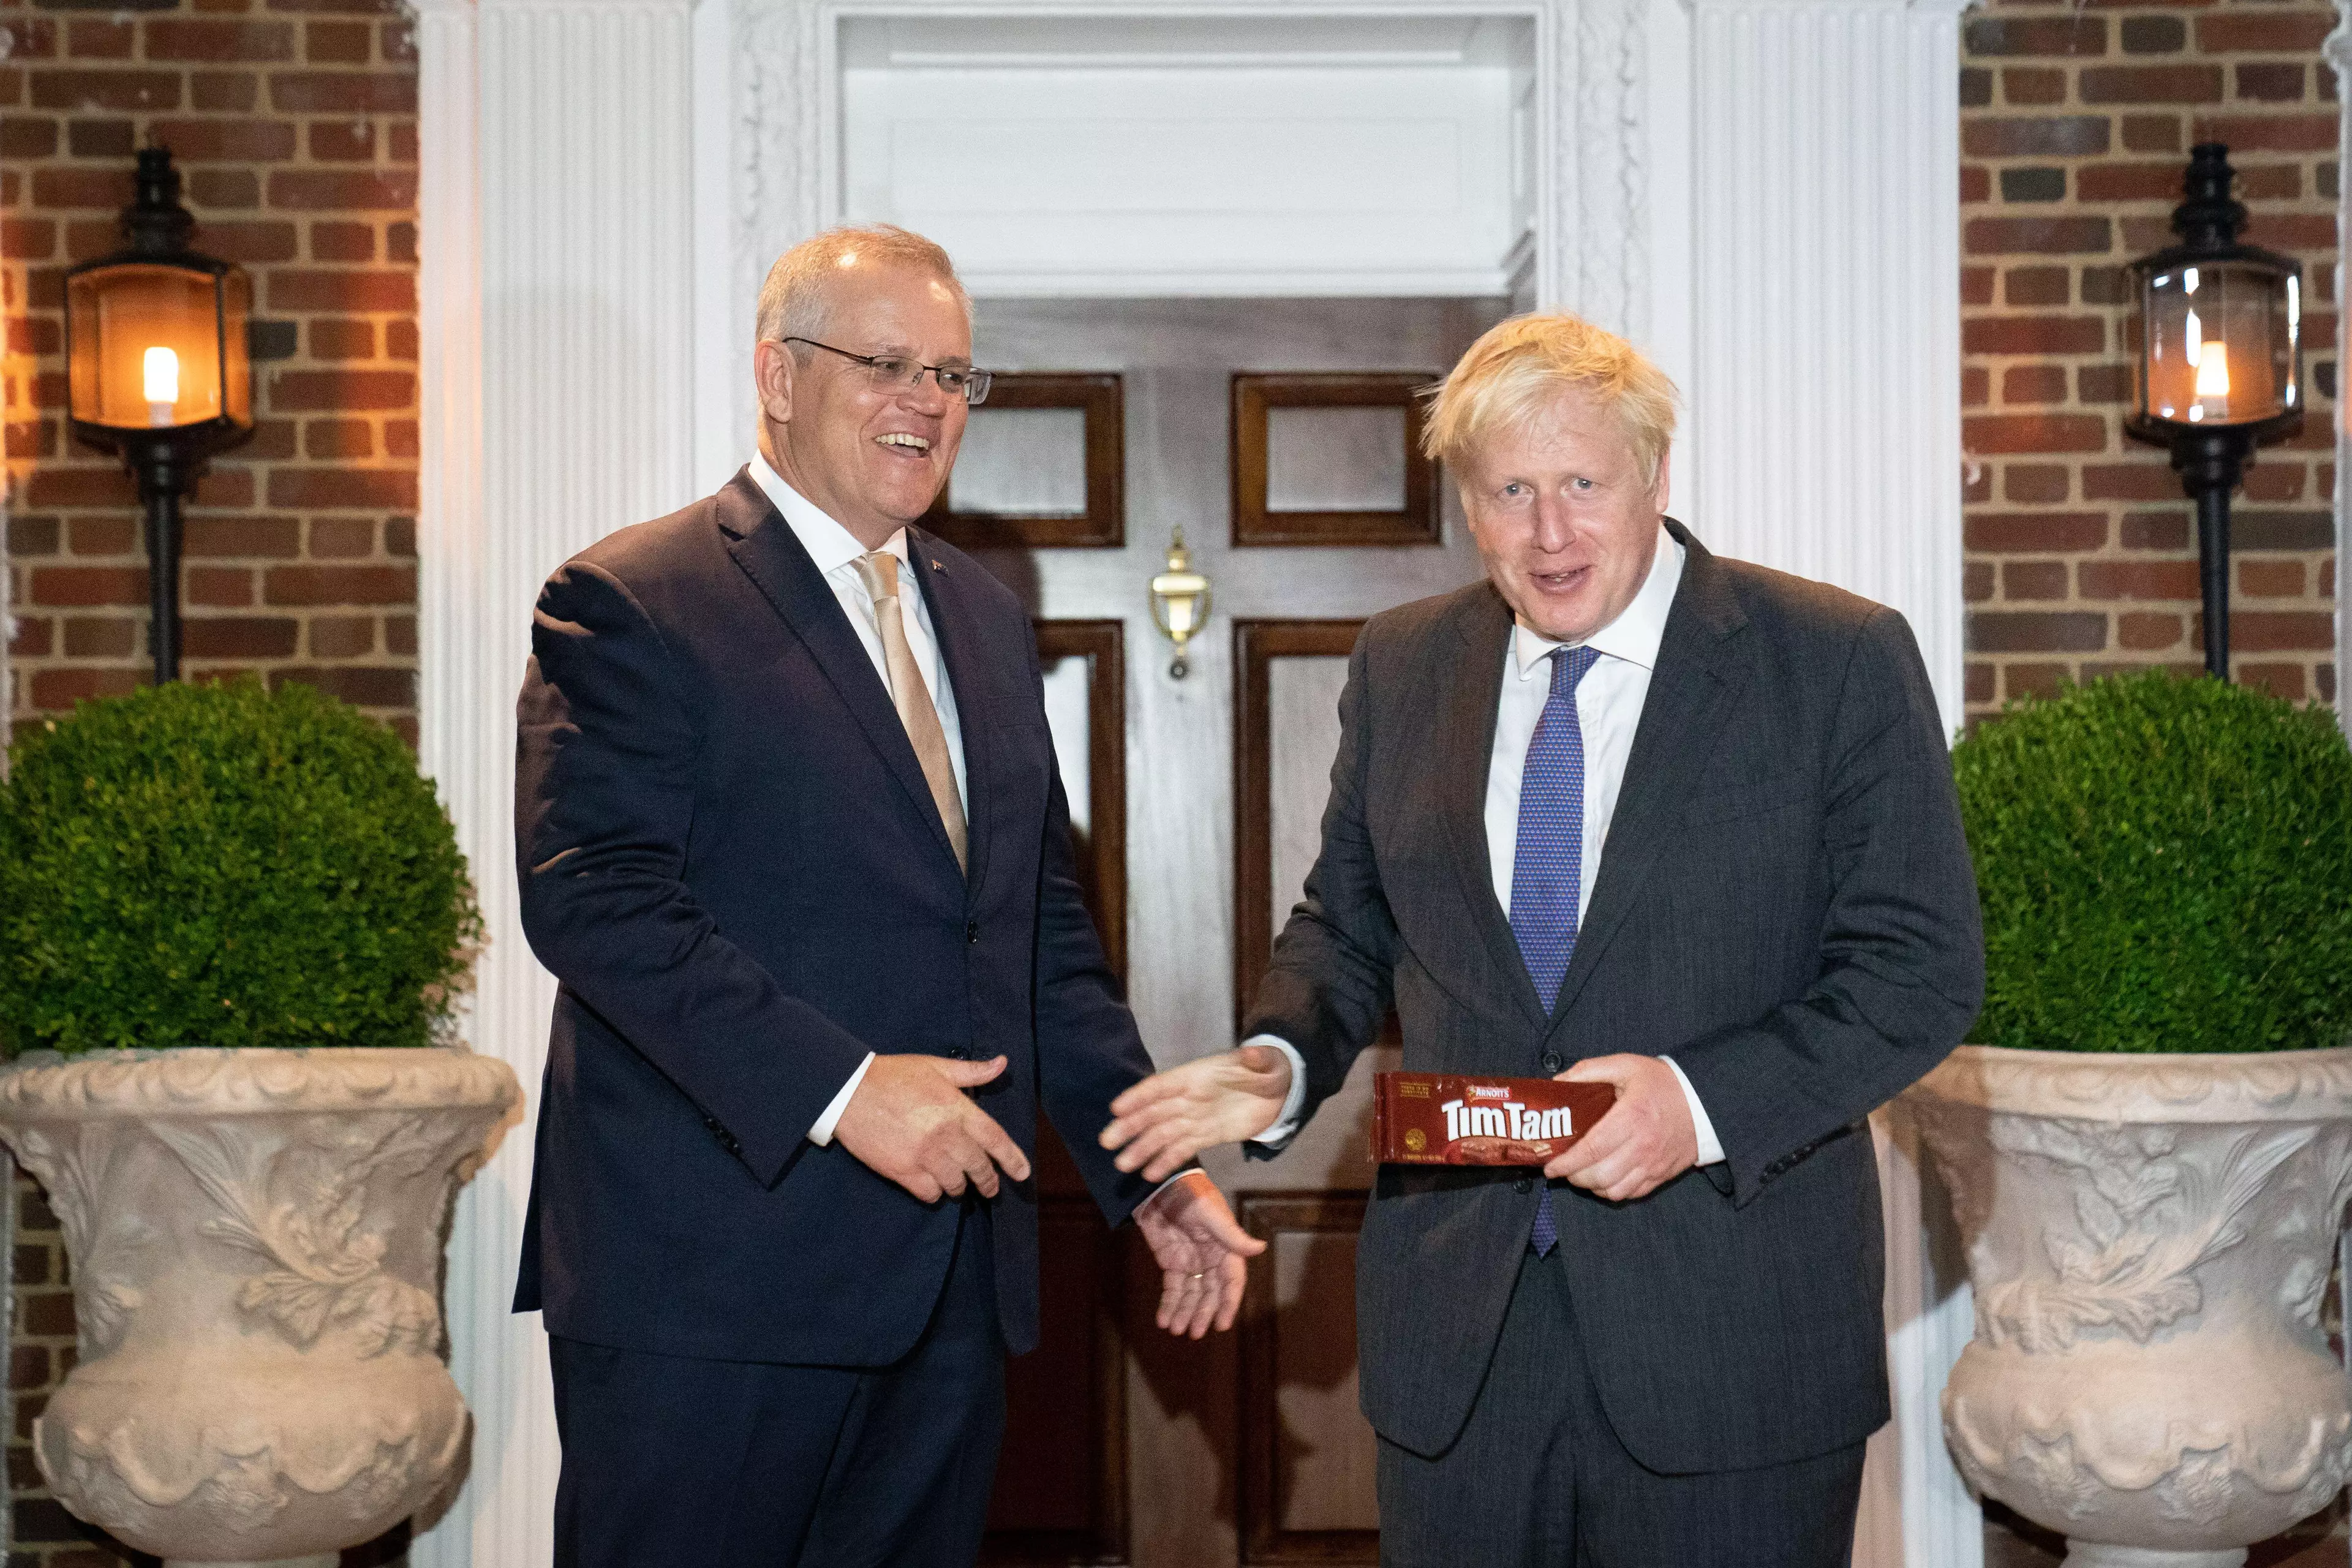 Scott Morrison gifts Tim Tams to Boris Johnson.